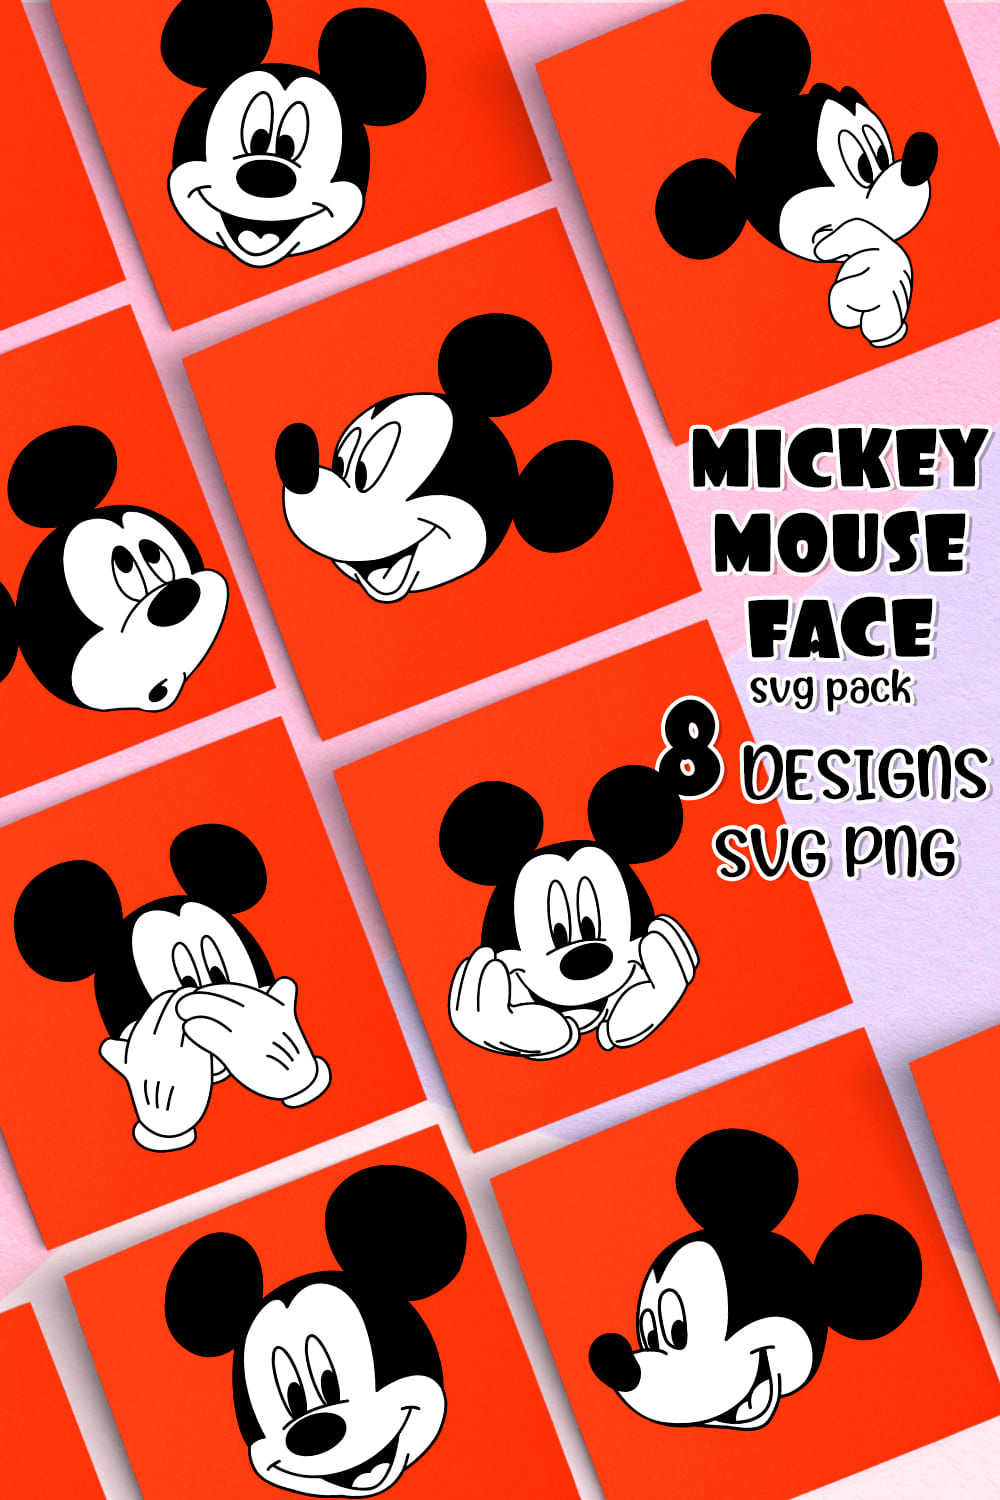 Mickey Mouse Face Svg - Pinterest.